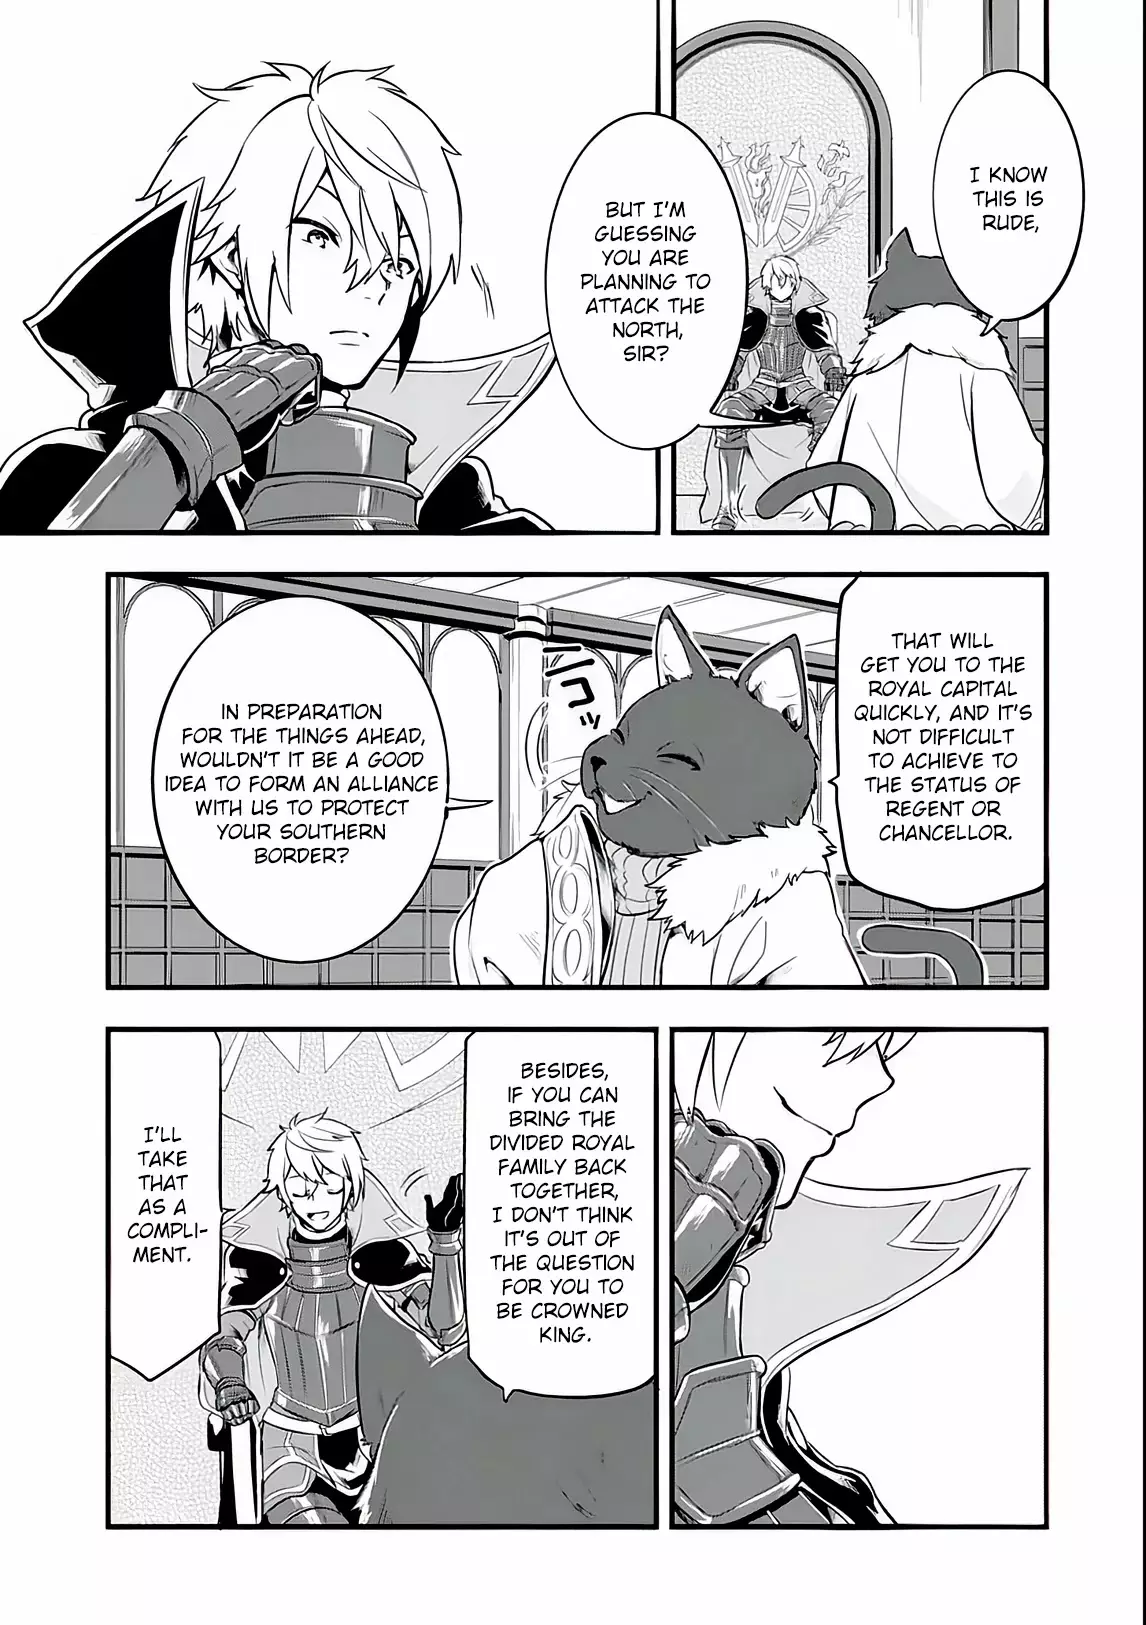 Mysterious Job Called Oda Nobunaga - 11 page 3-96fd6b04